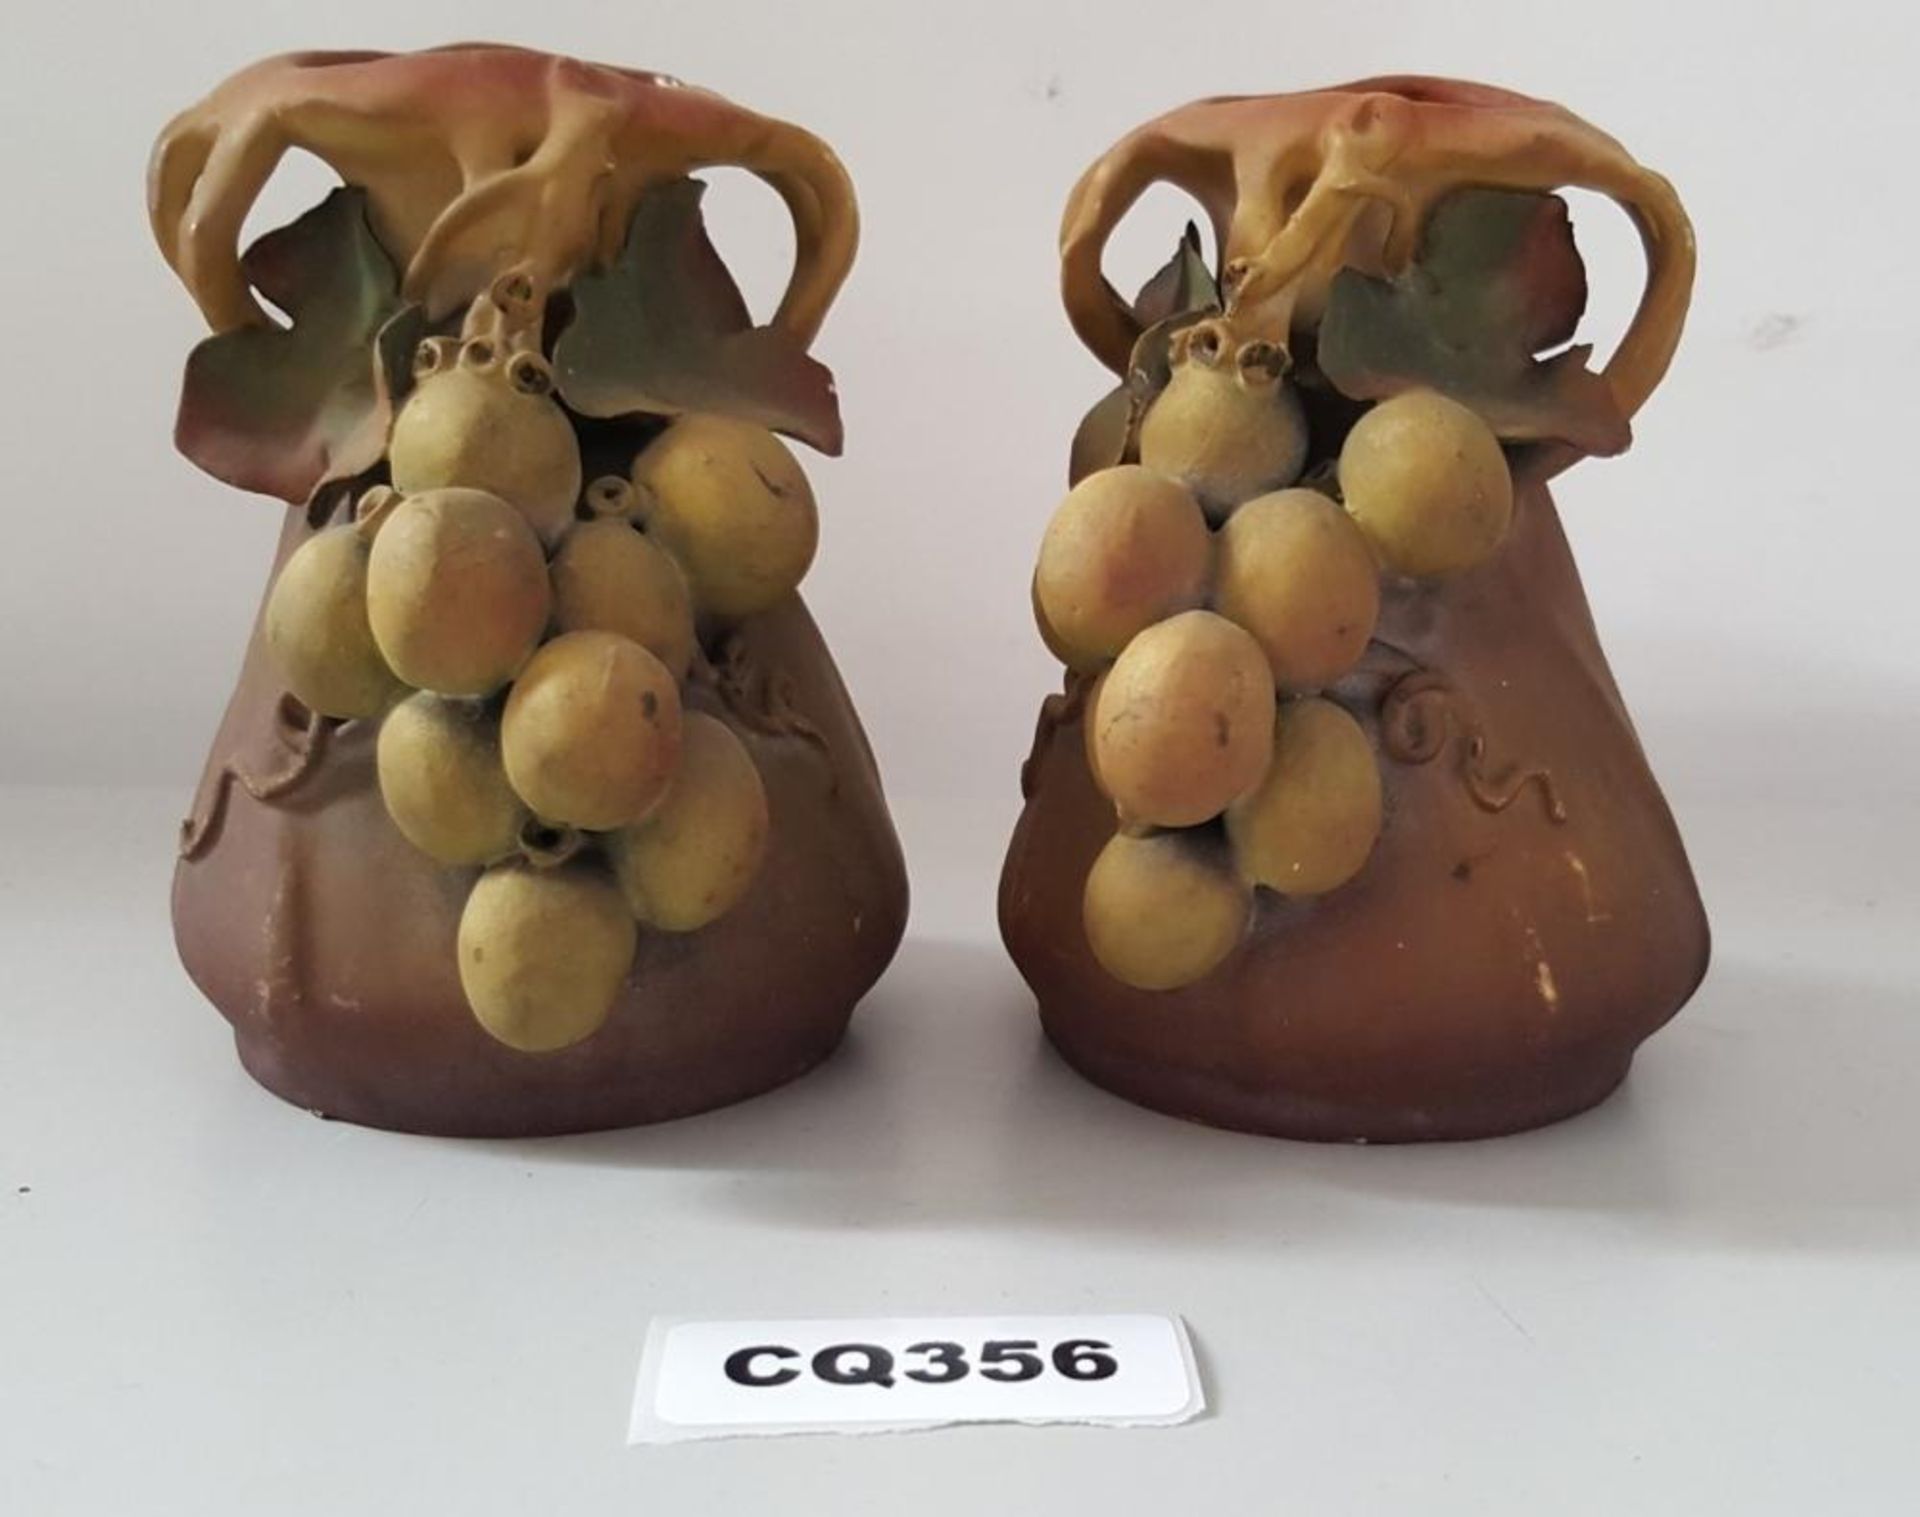 1 x A Pair Of Small Vases With Grape Design - Ref CQ356 E - Dimensions: H11/L9CM - CL334 - Location